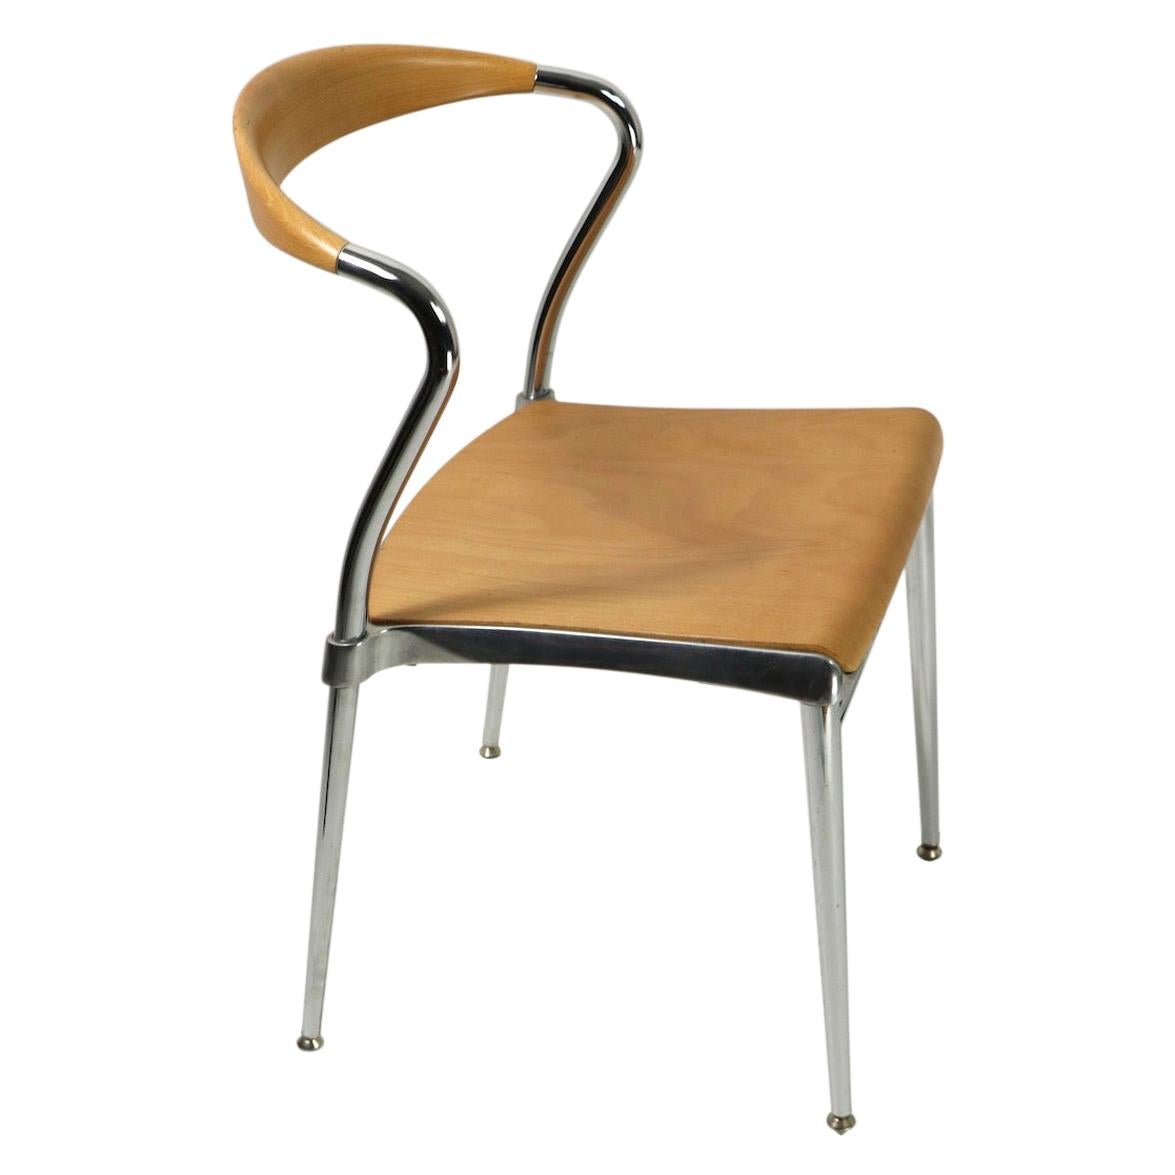 Piuma Chair Designed by Luigi Origlia